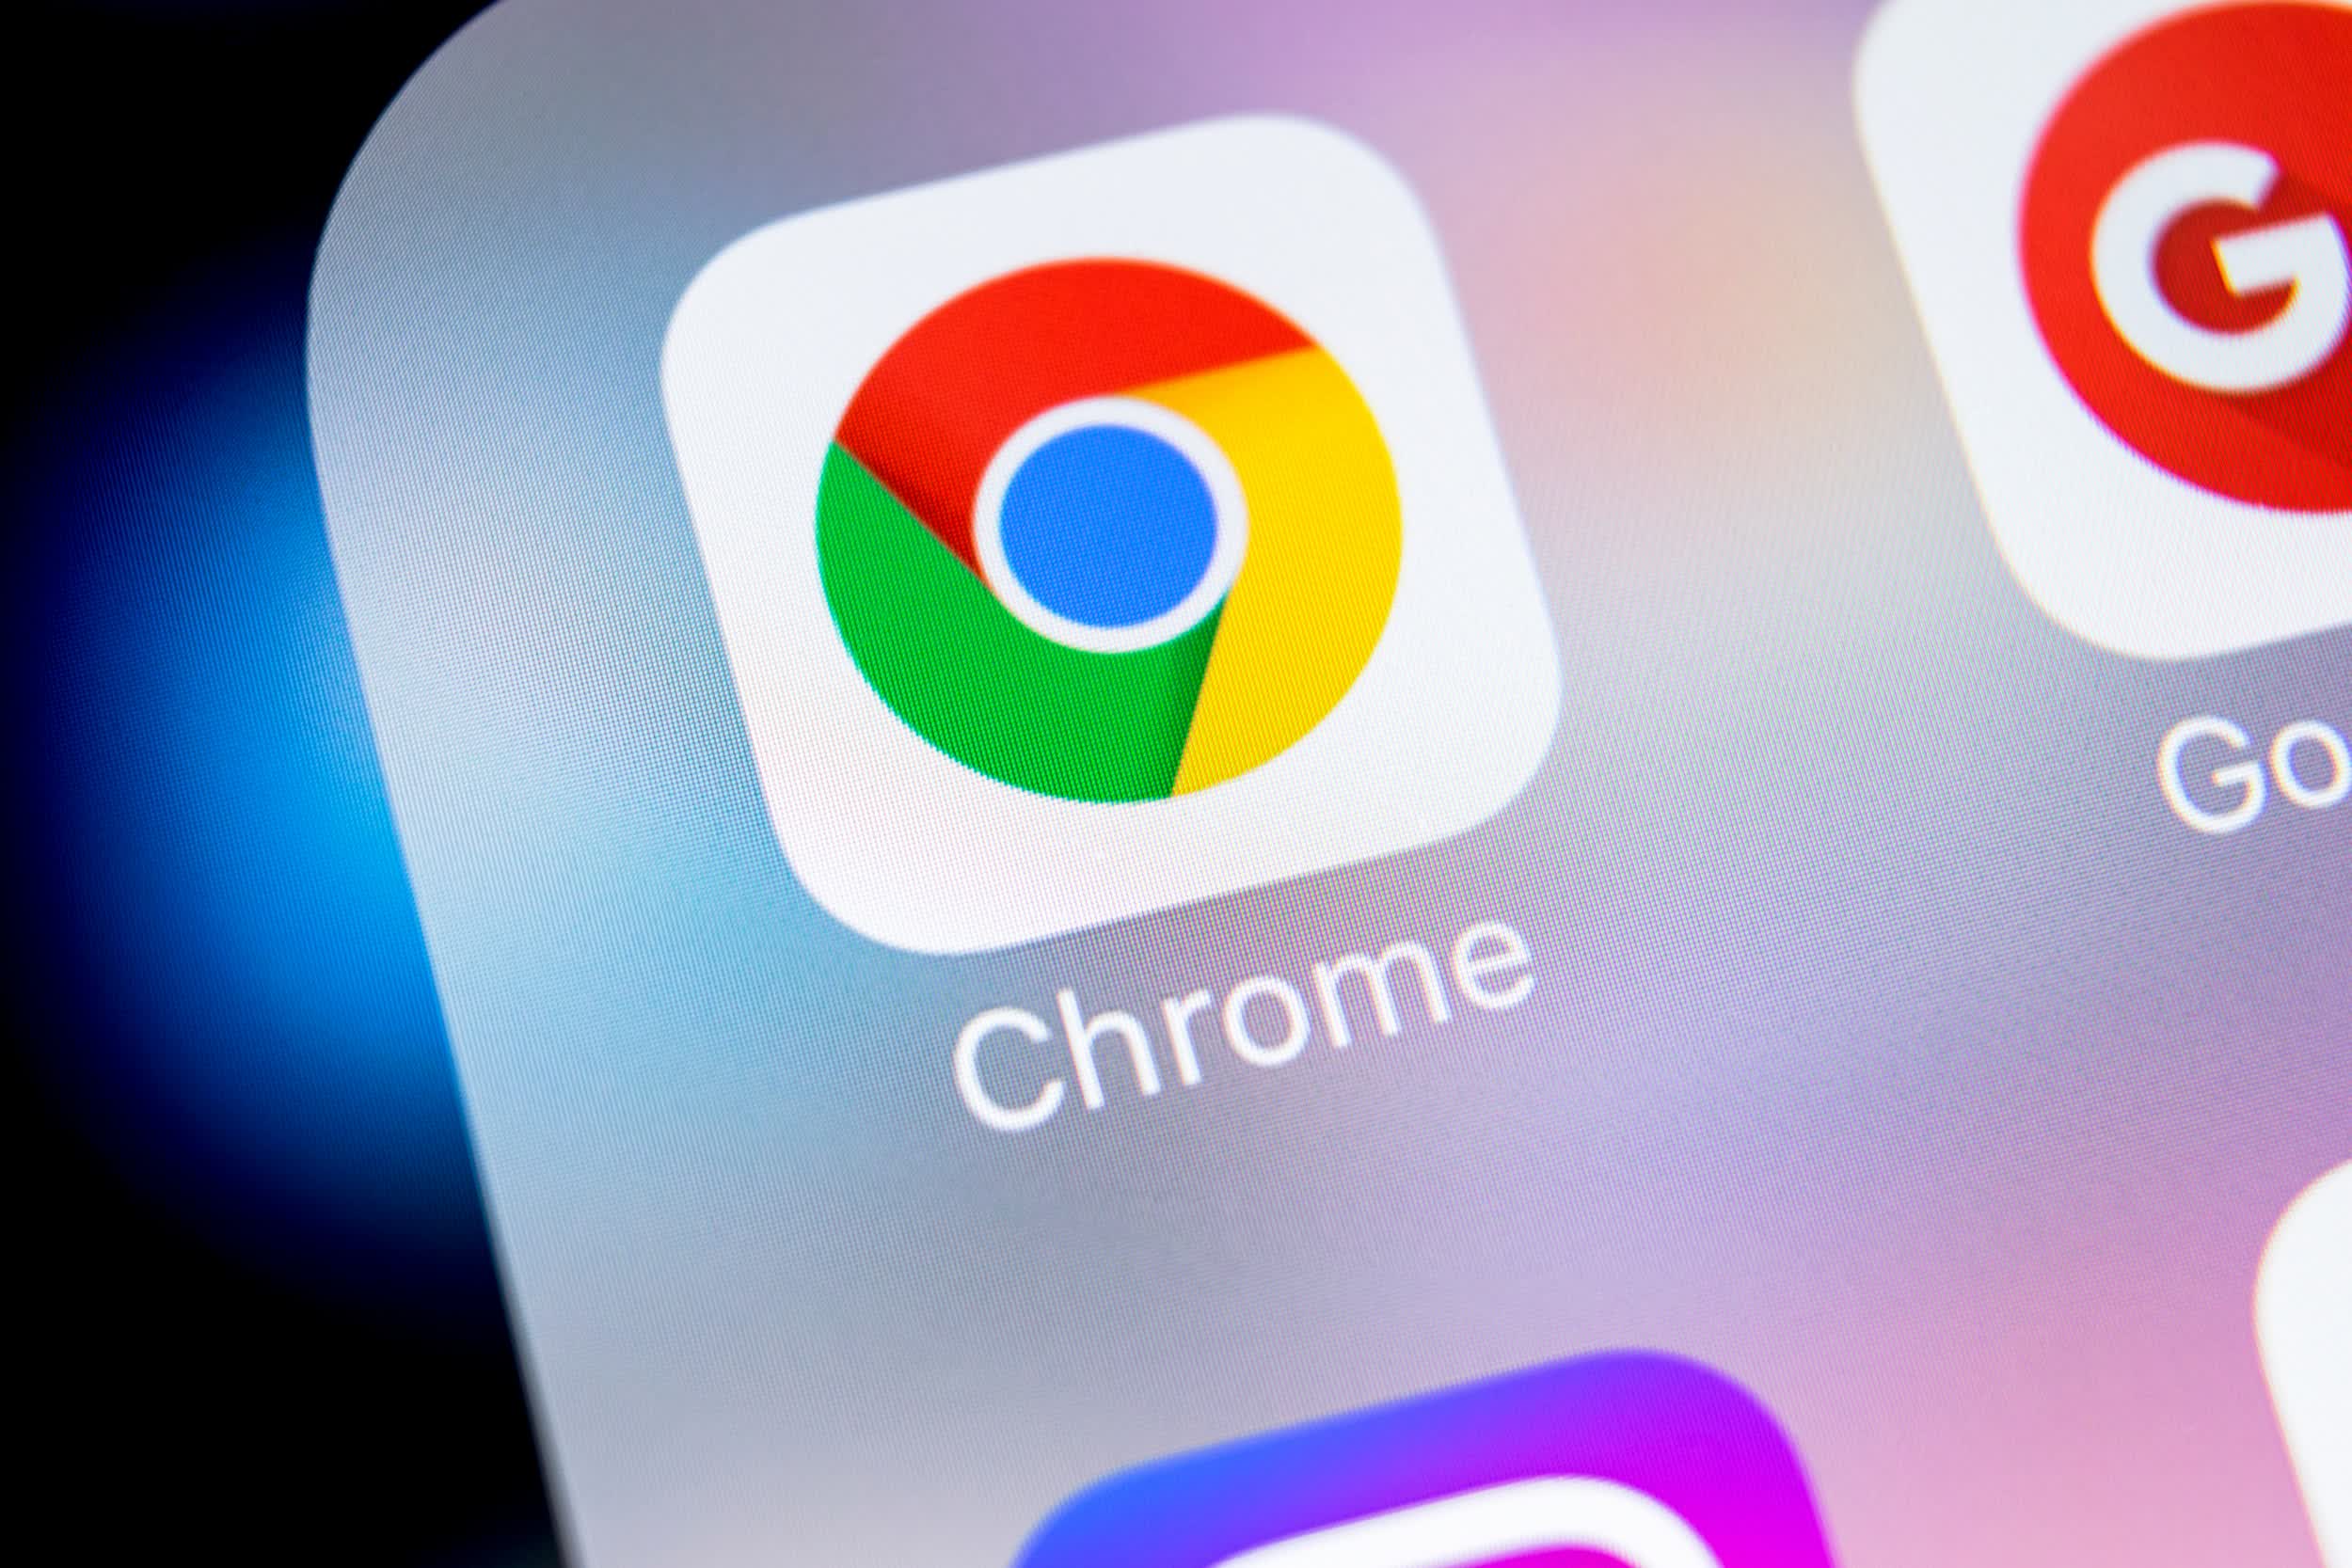 Google details performance enhancements in Chrome 89